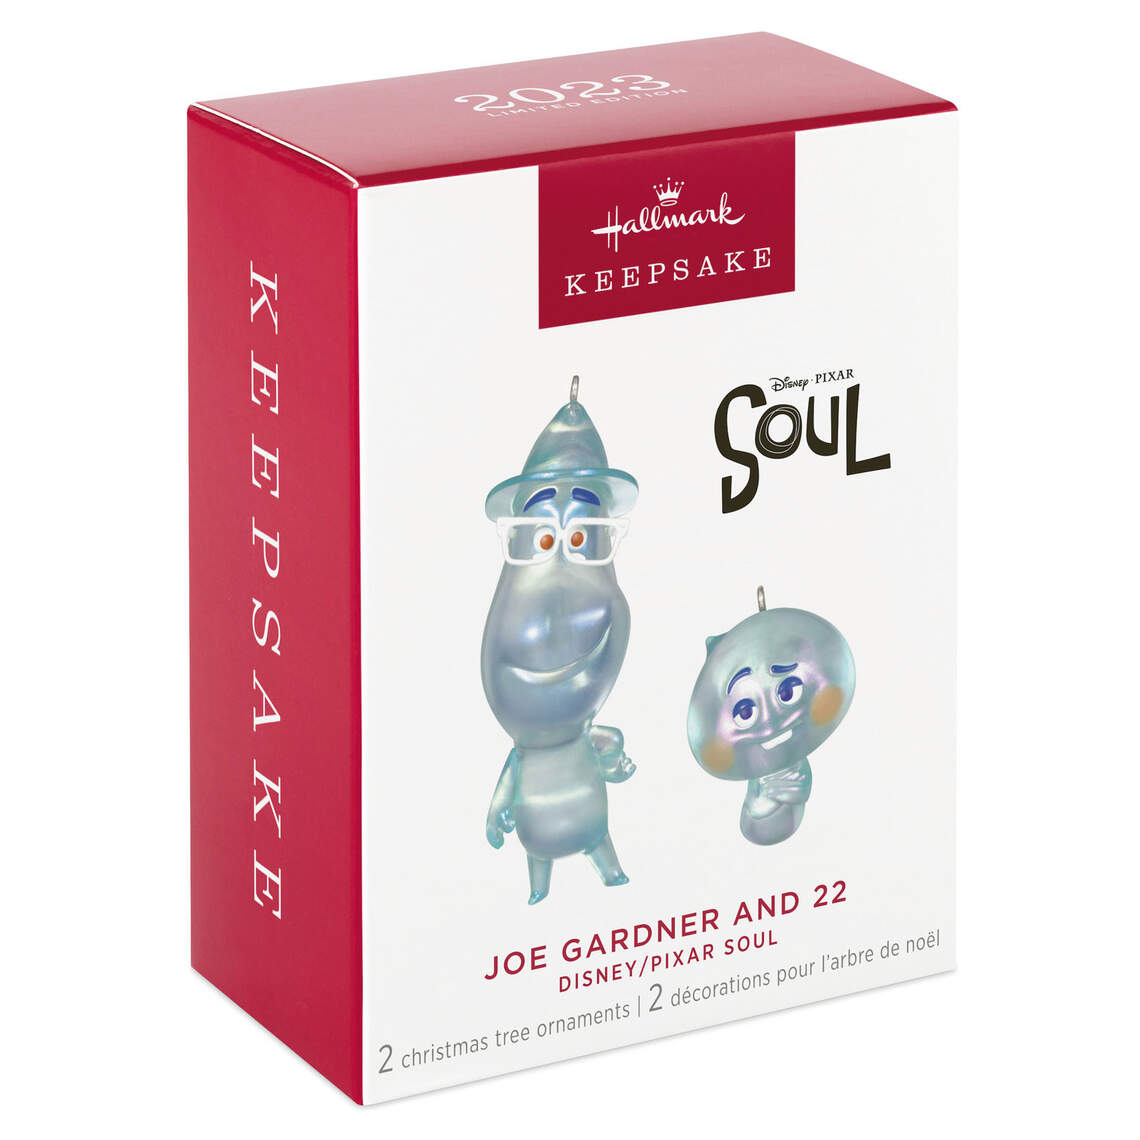 Joe Gardner and 22 Disney Pixar Soul - Hallmark Keepsake Ornaments 2023